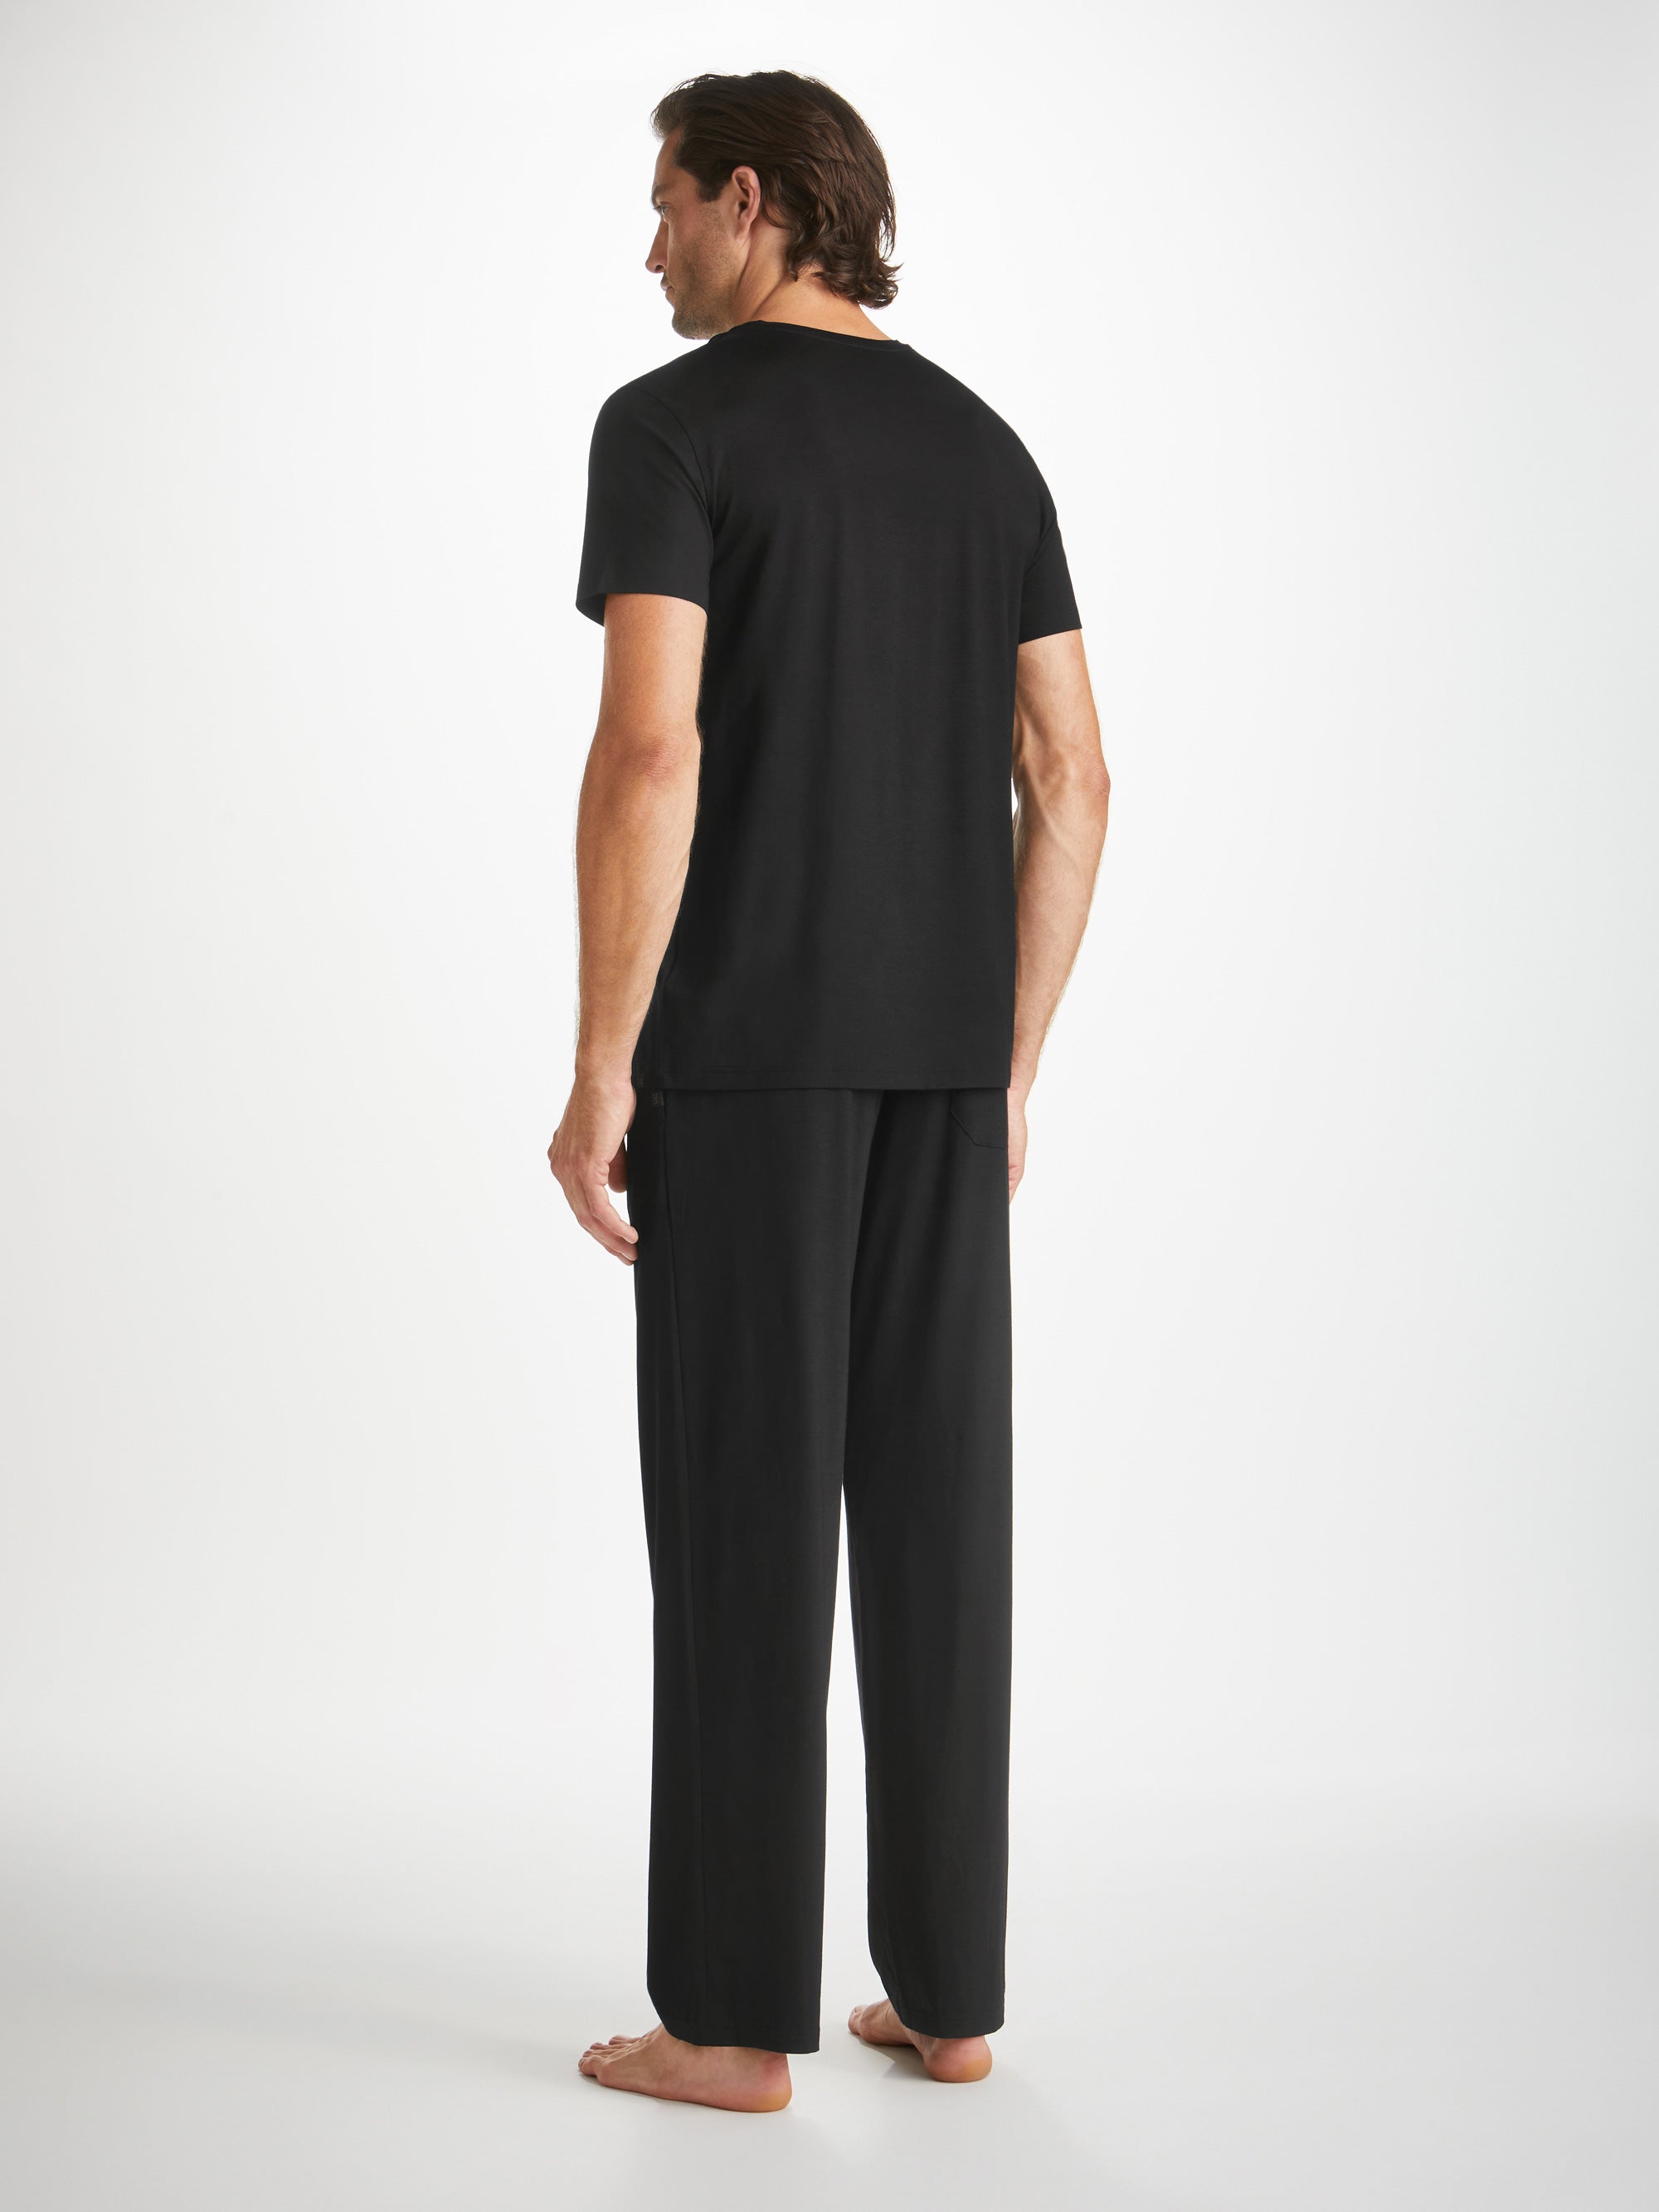 Men's V-Neck T-Shirt Basel Micro Modal Stretch Black